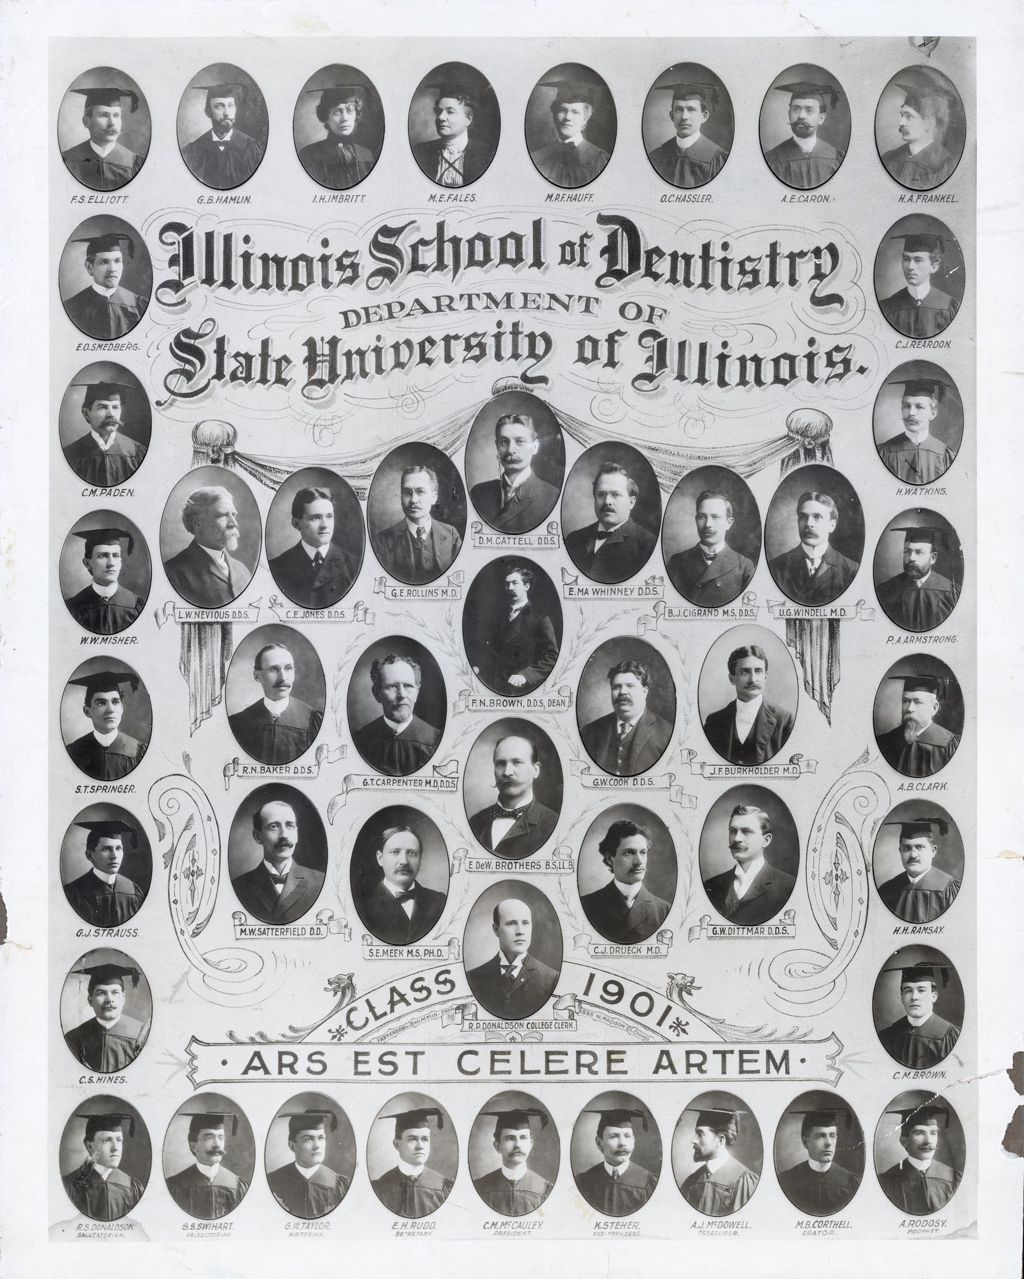 Miniature of 1901 graduating class, University of Illinois College of Dentistry